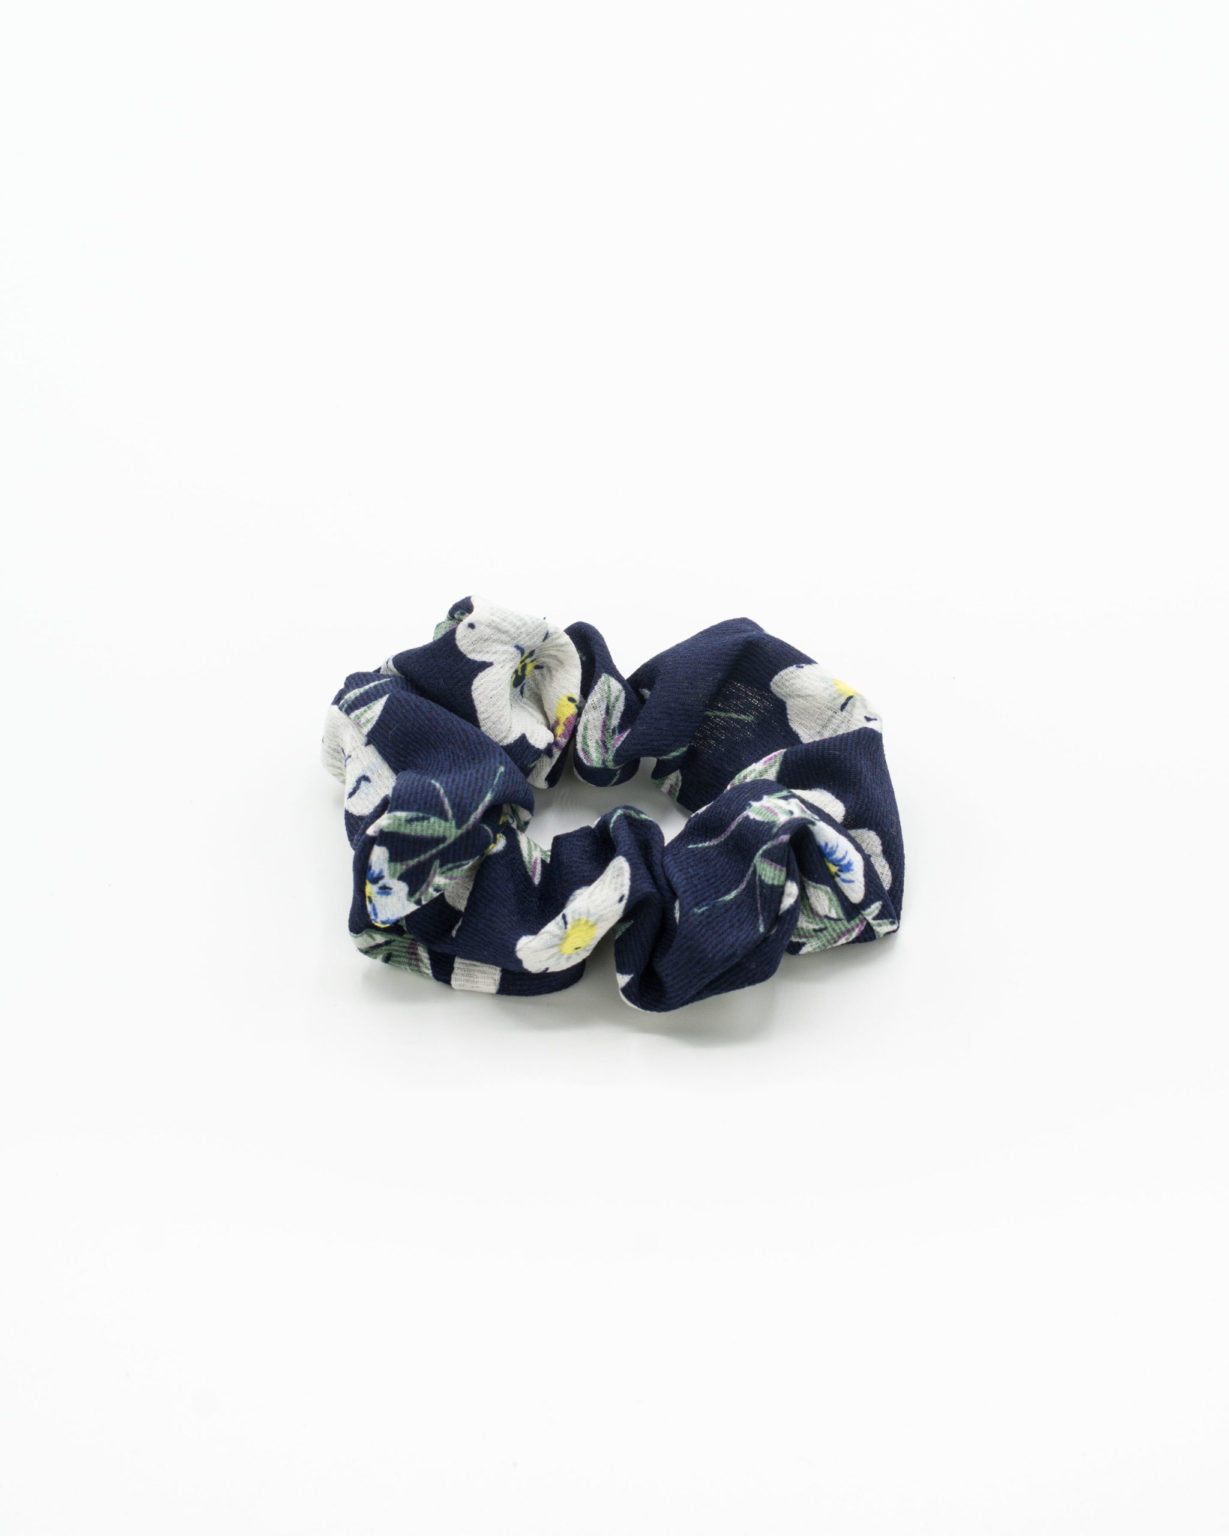 chouchou bleu marine à fleurs blanches